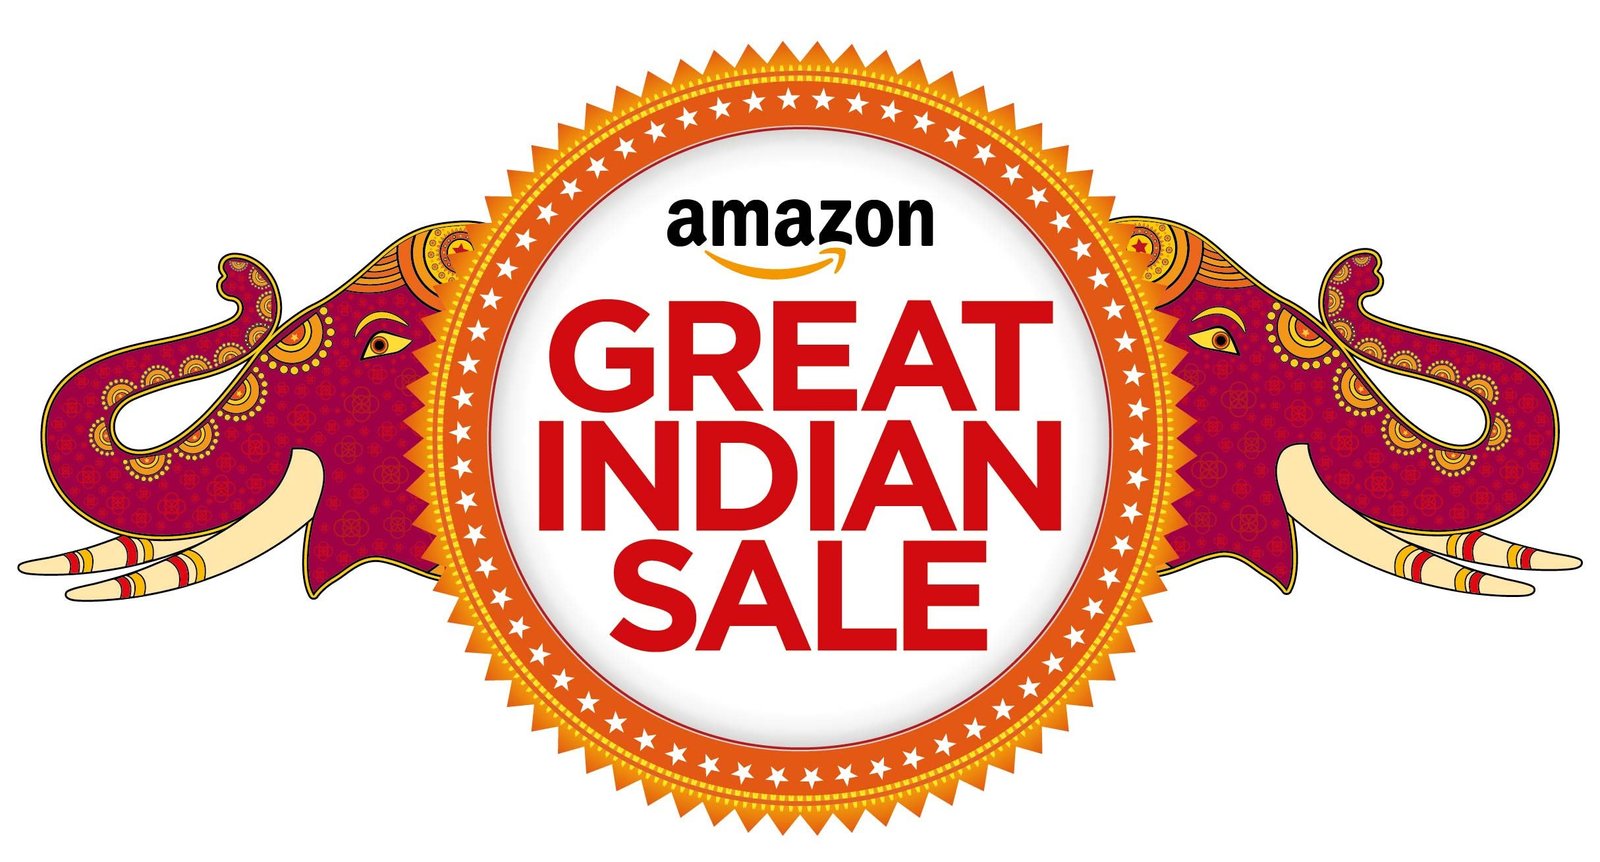 Amazon Great Indian Sale 2016 Deals and Discounts on Smartphones